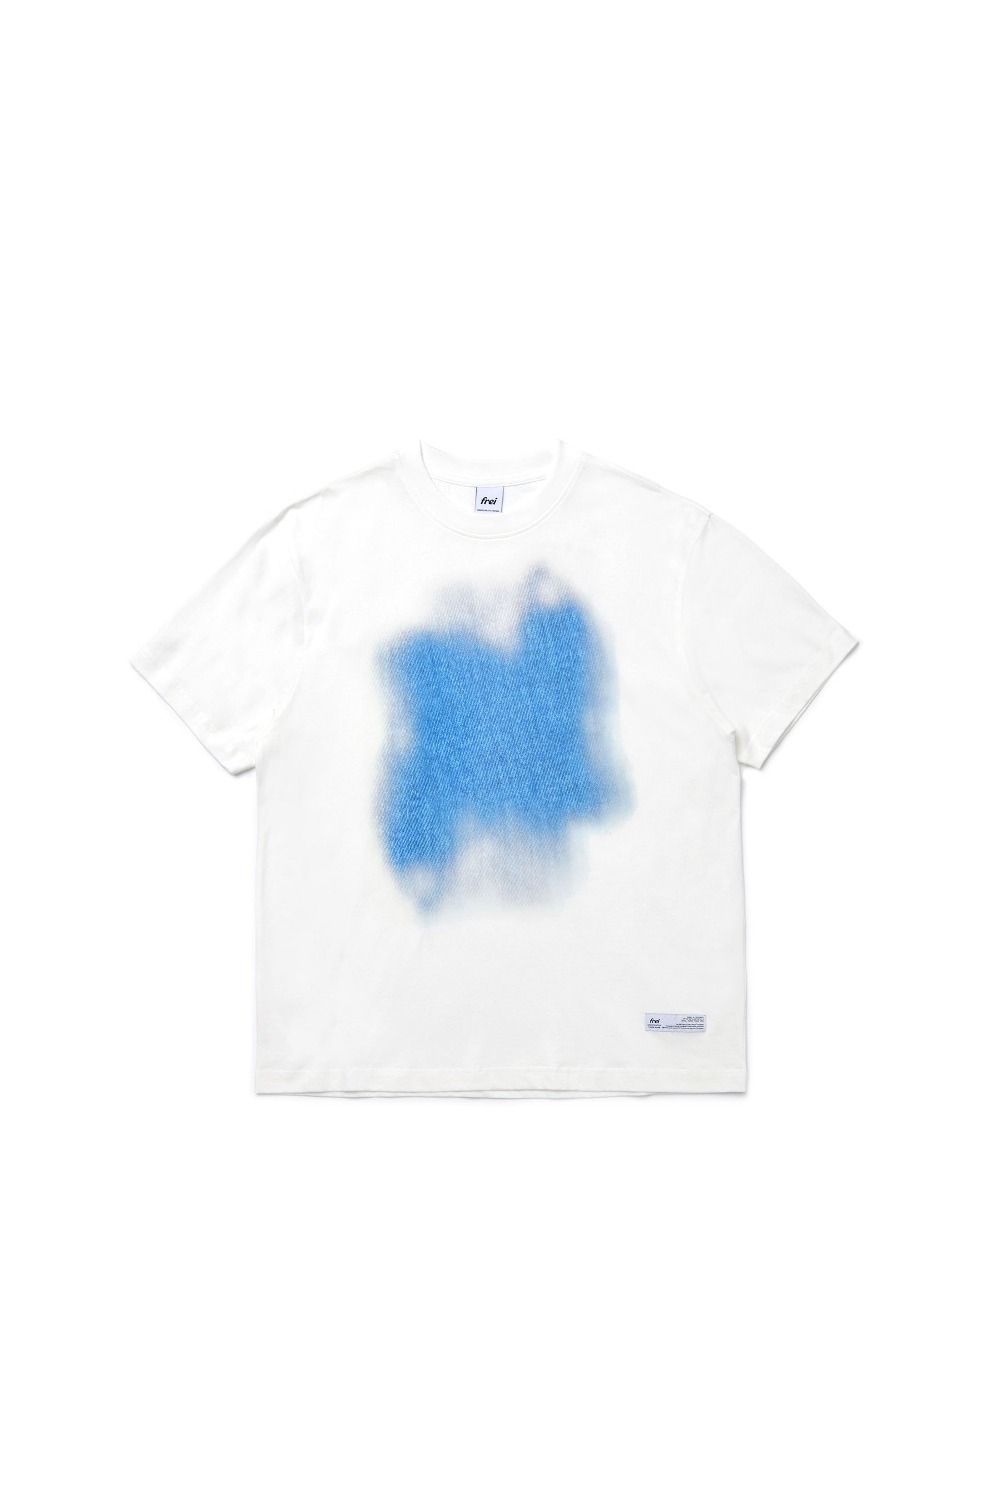 SCRAPPED 티셔츠 (블루) - 리치즈 RICHEZ